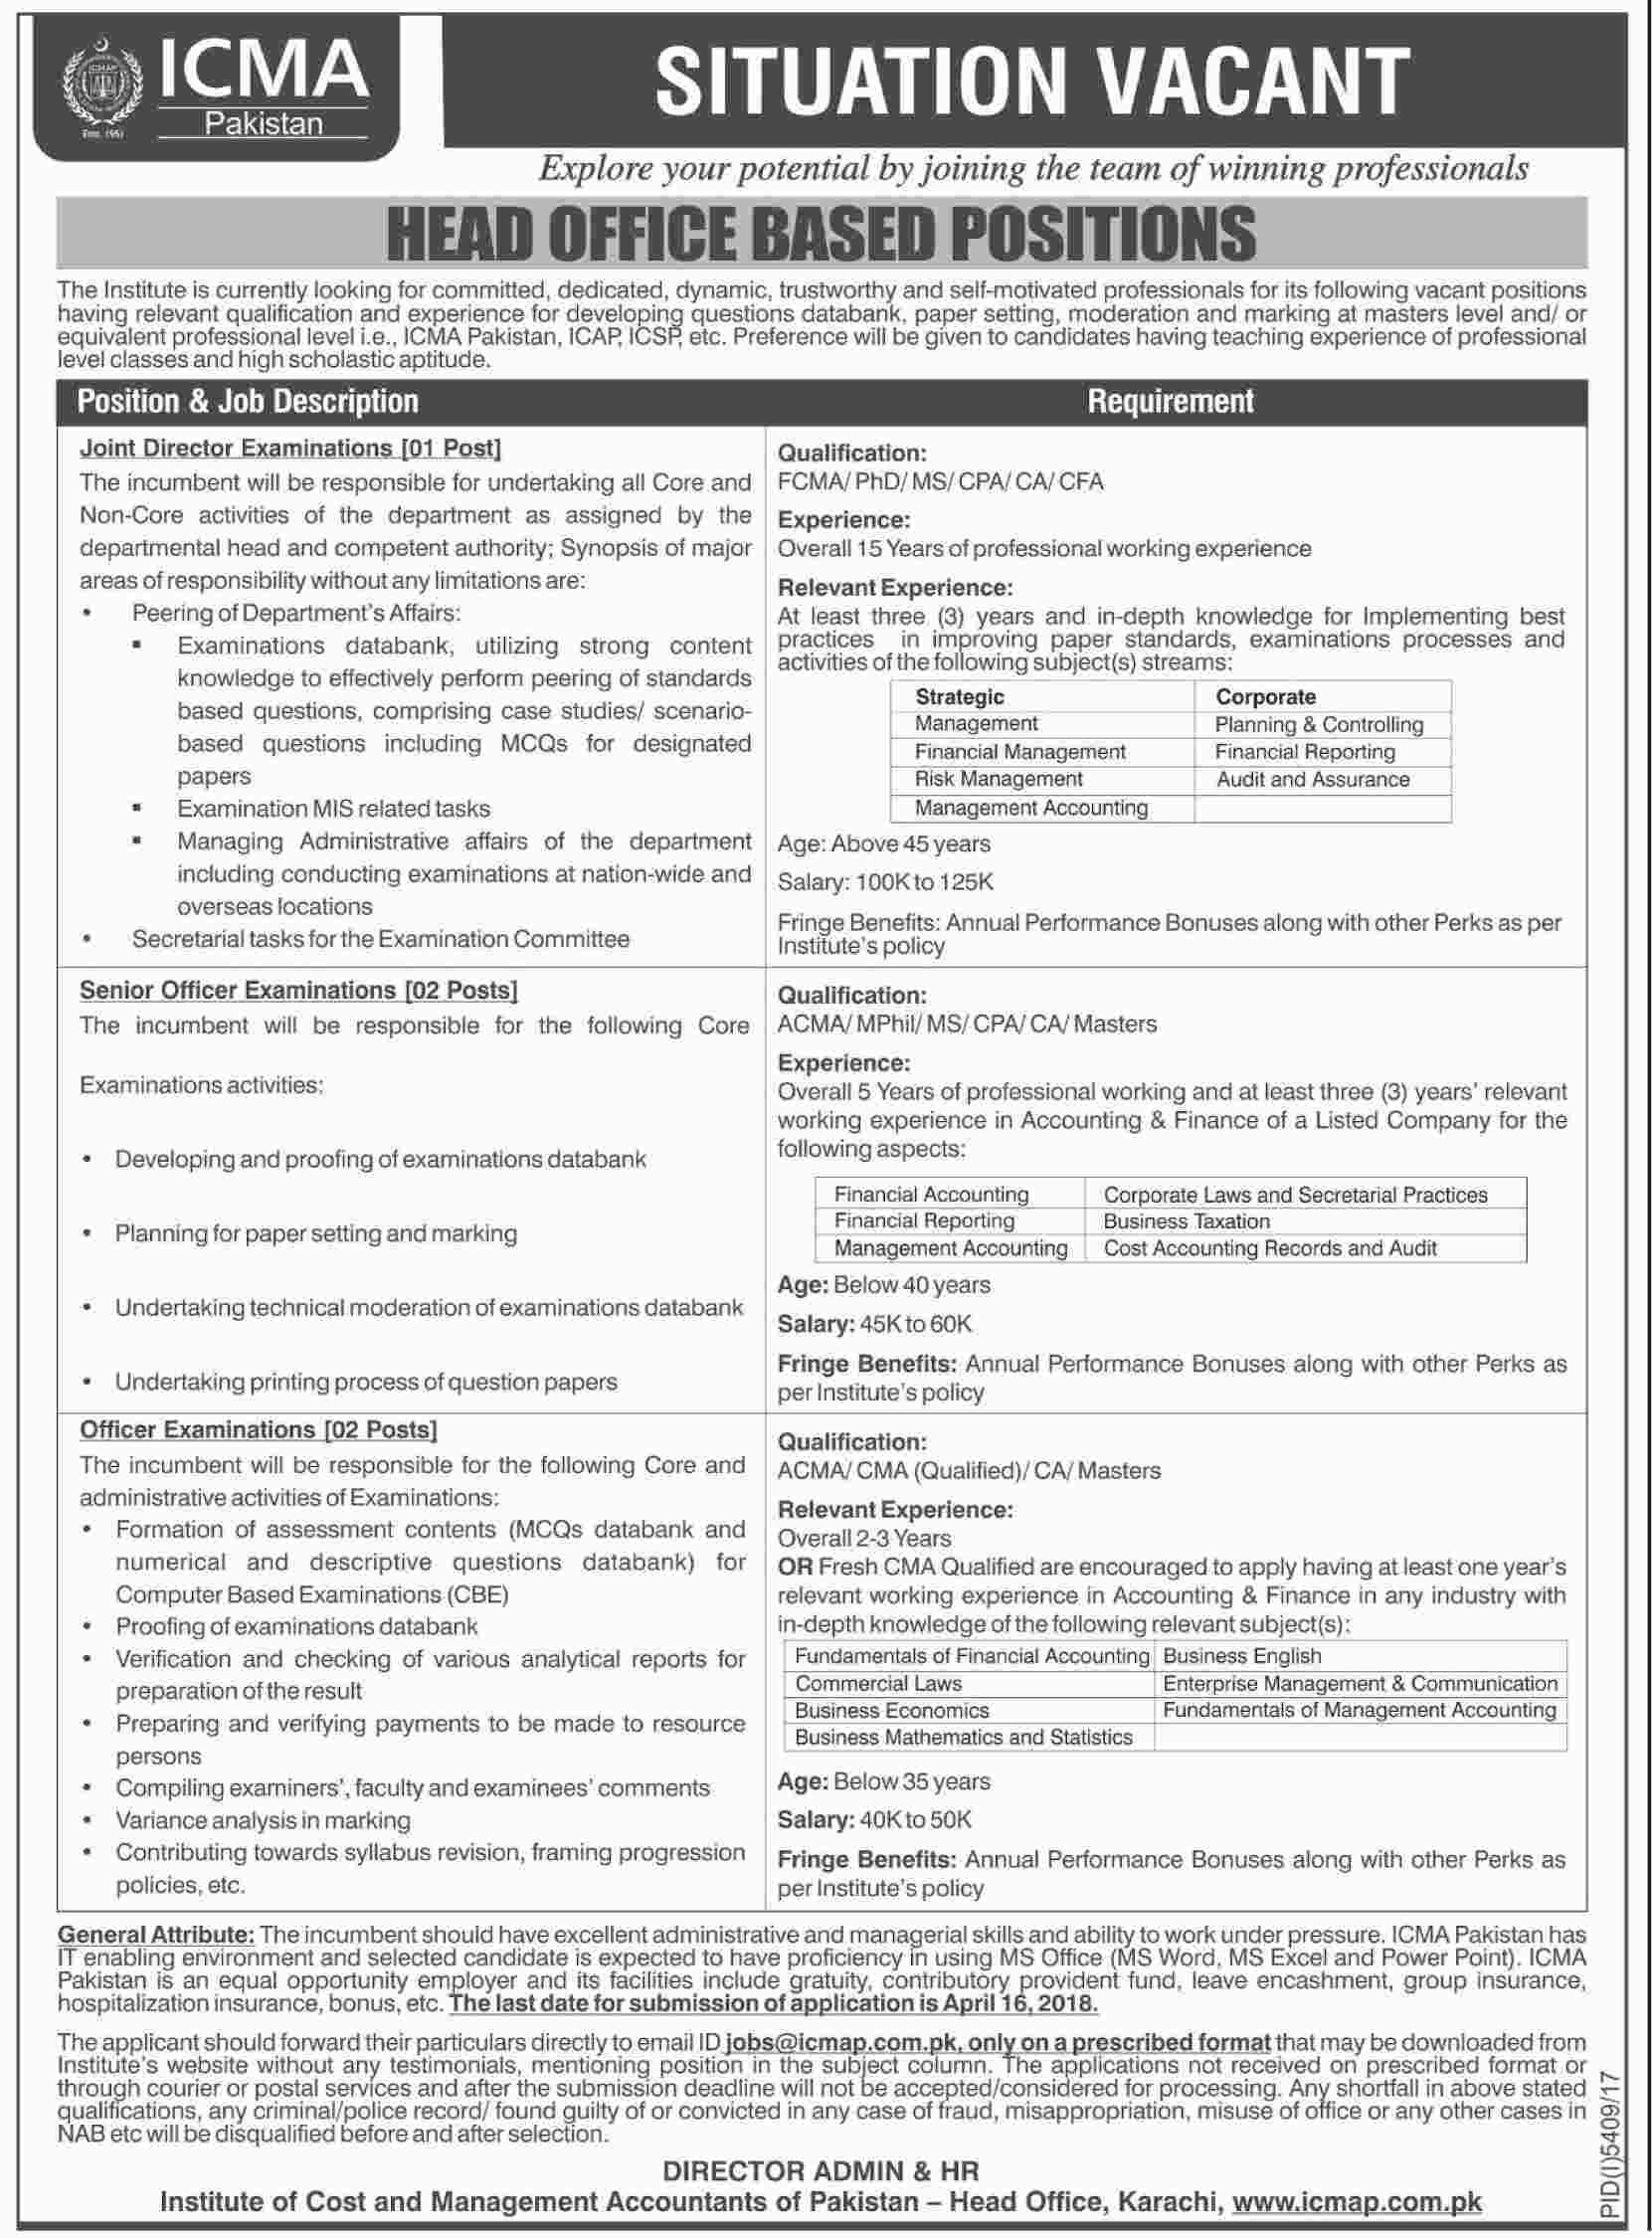 Jobs in ICMA Pakistan 01 April 2018